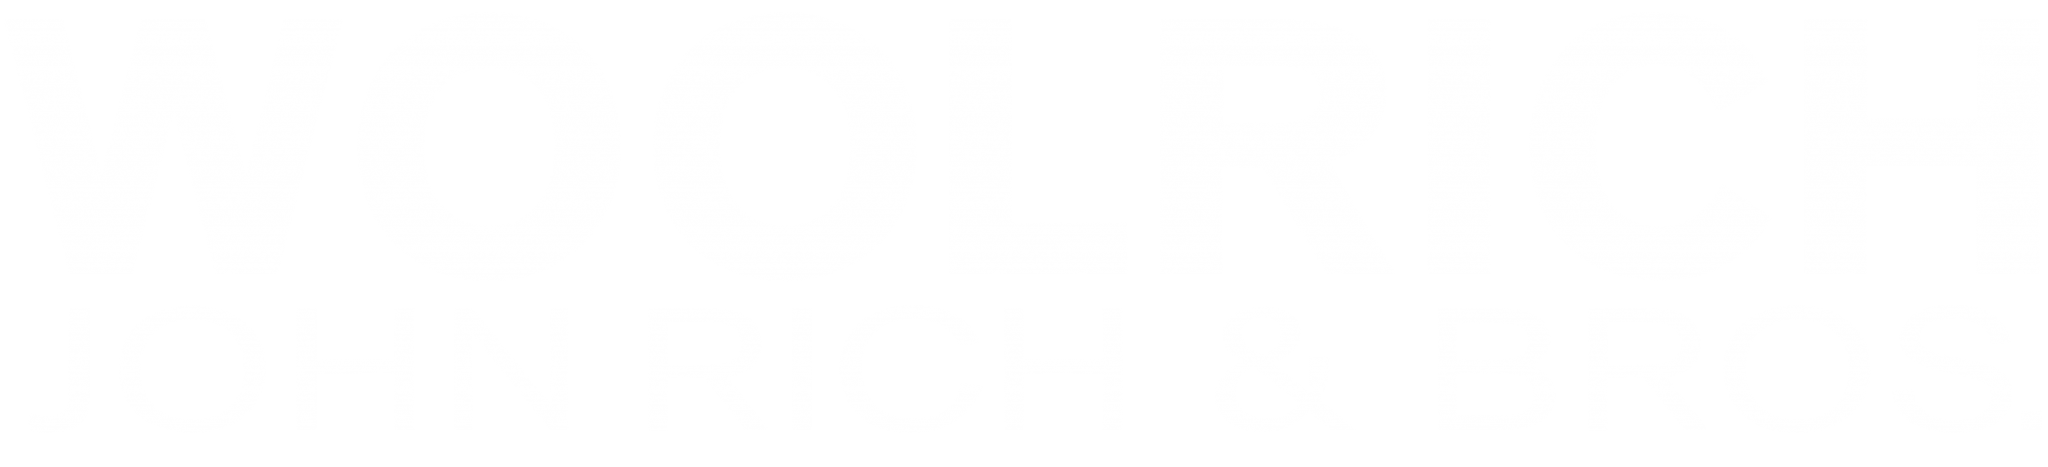 Woolrich_logo_wordmark